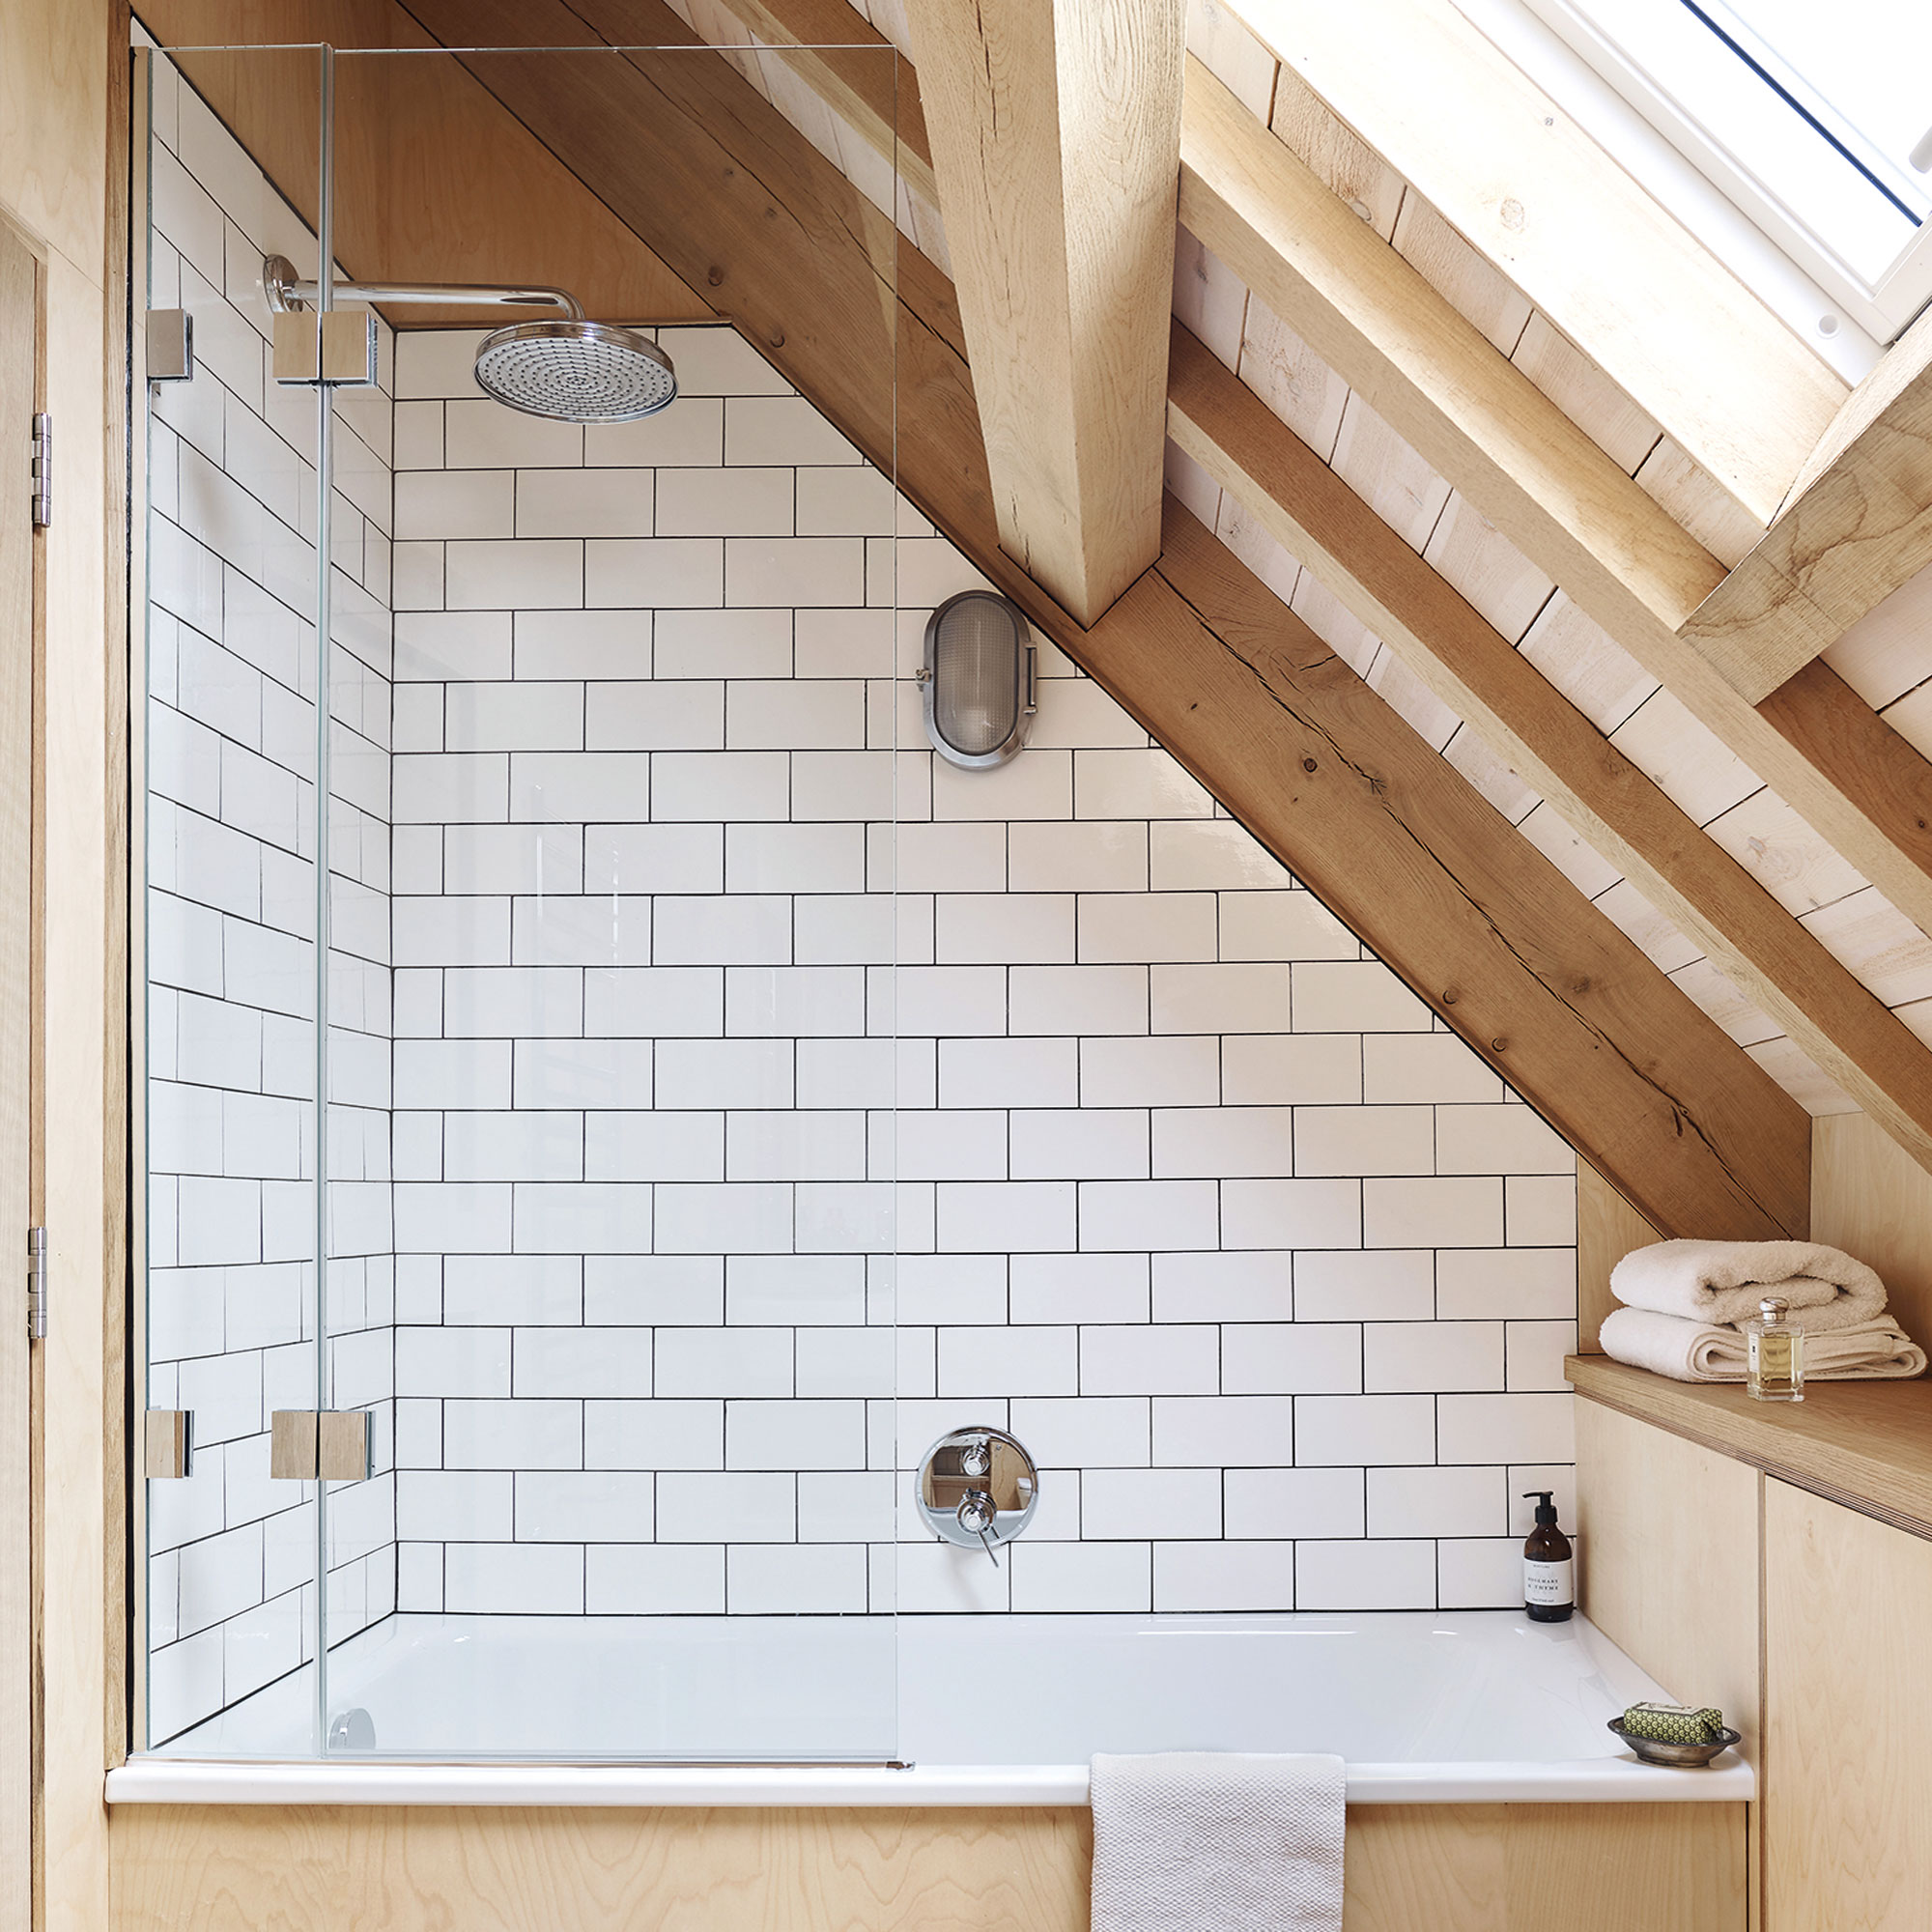 14 Great Ways to Design Corners in the Bathroom